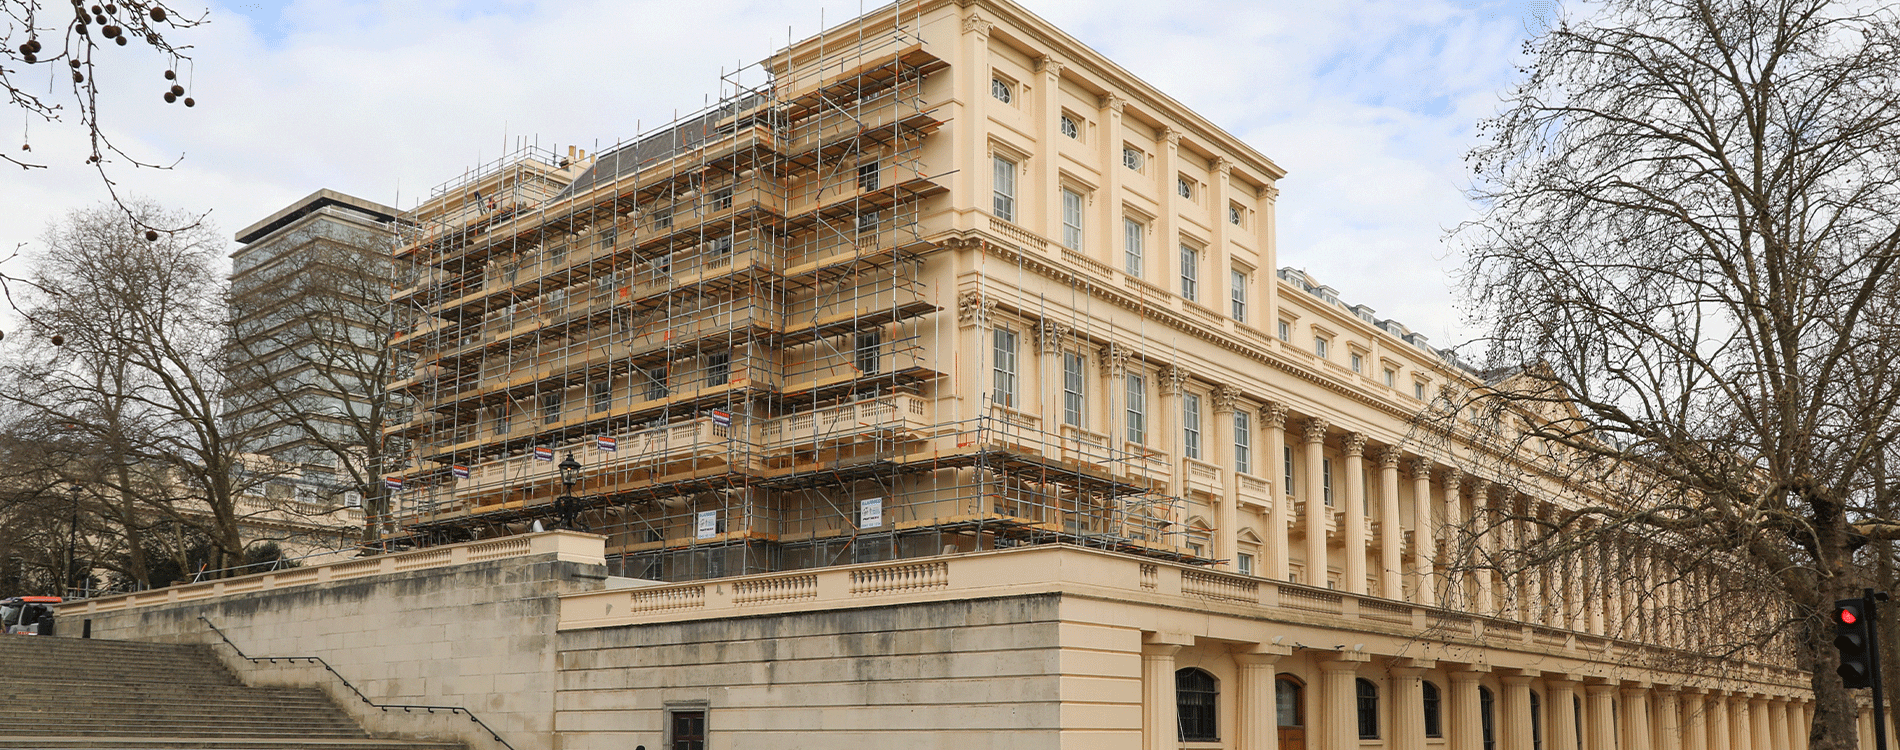 Heritage building under scaffold, Carlton House Terrace